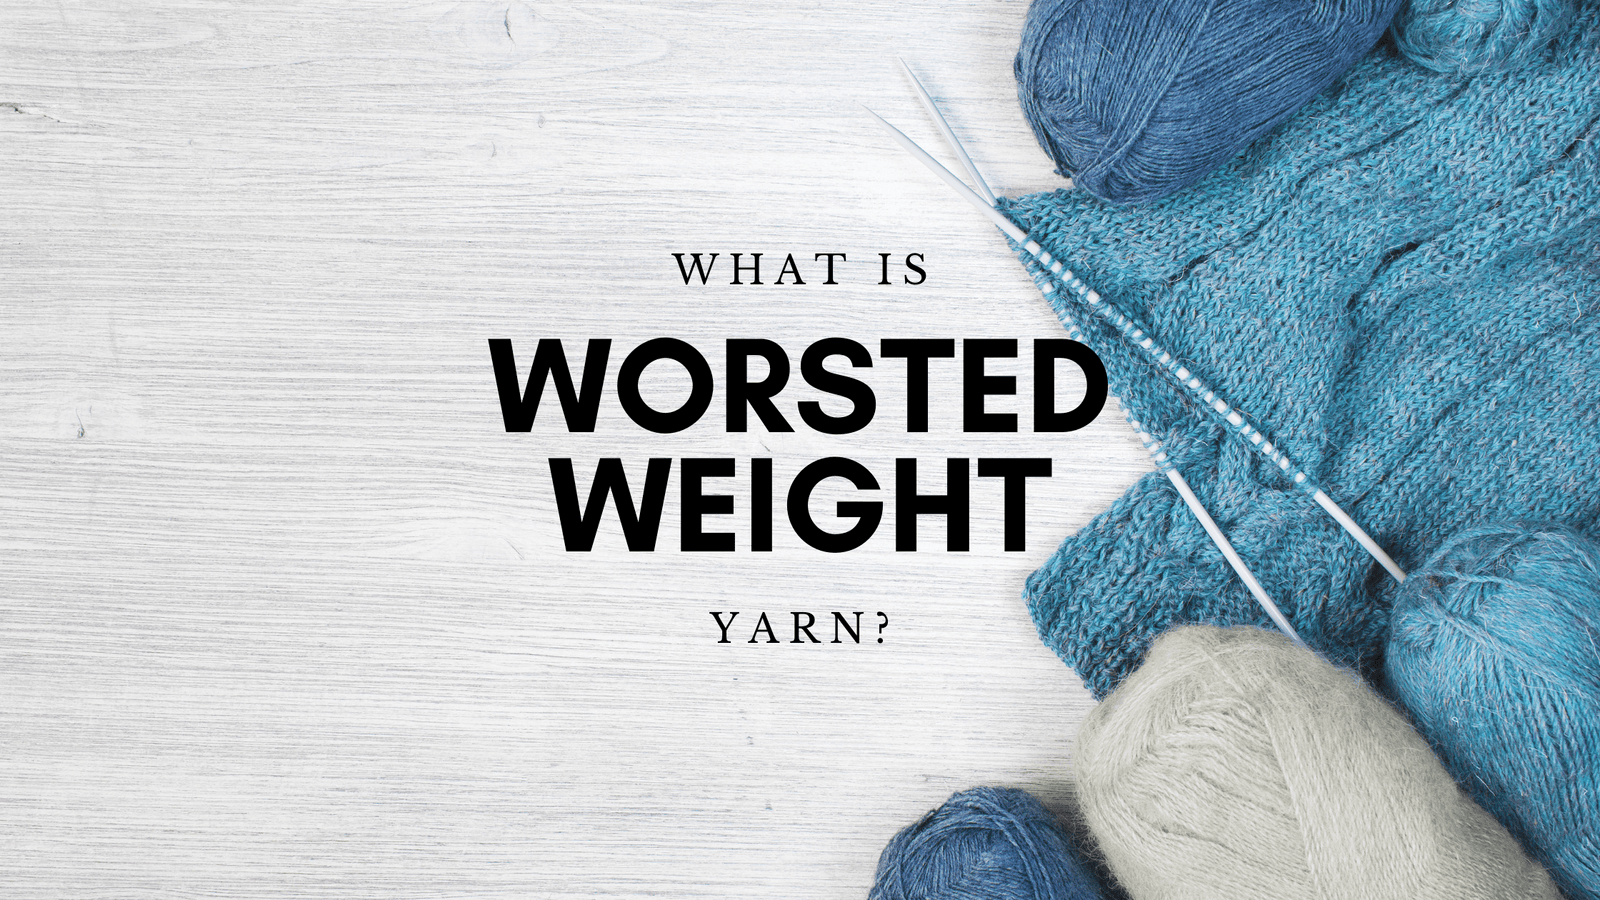 What is Worsted Weight Yarn? - Darn Yarn